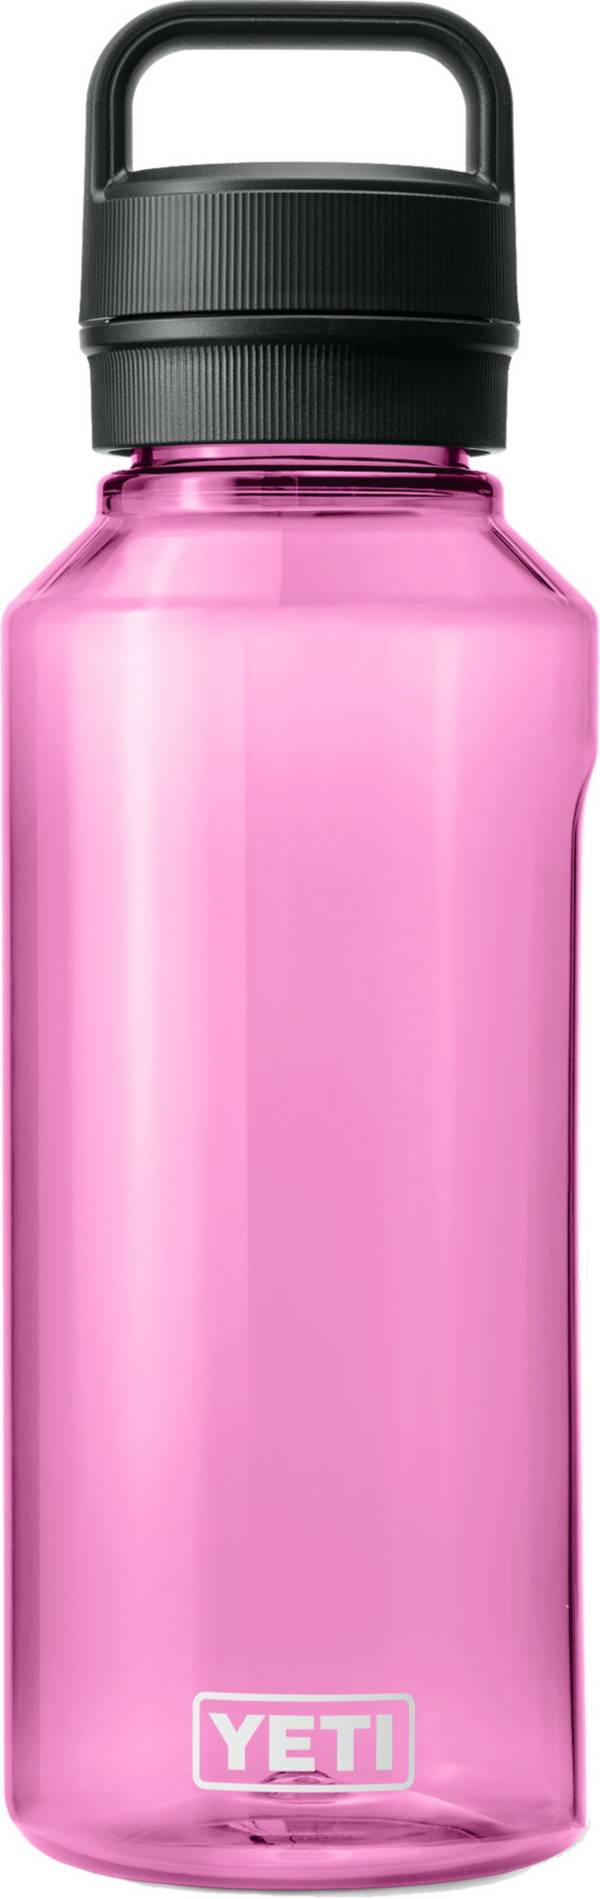 YETI Yonder 1.5L / 50 oz. Water Bottle product image